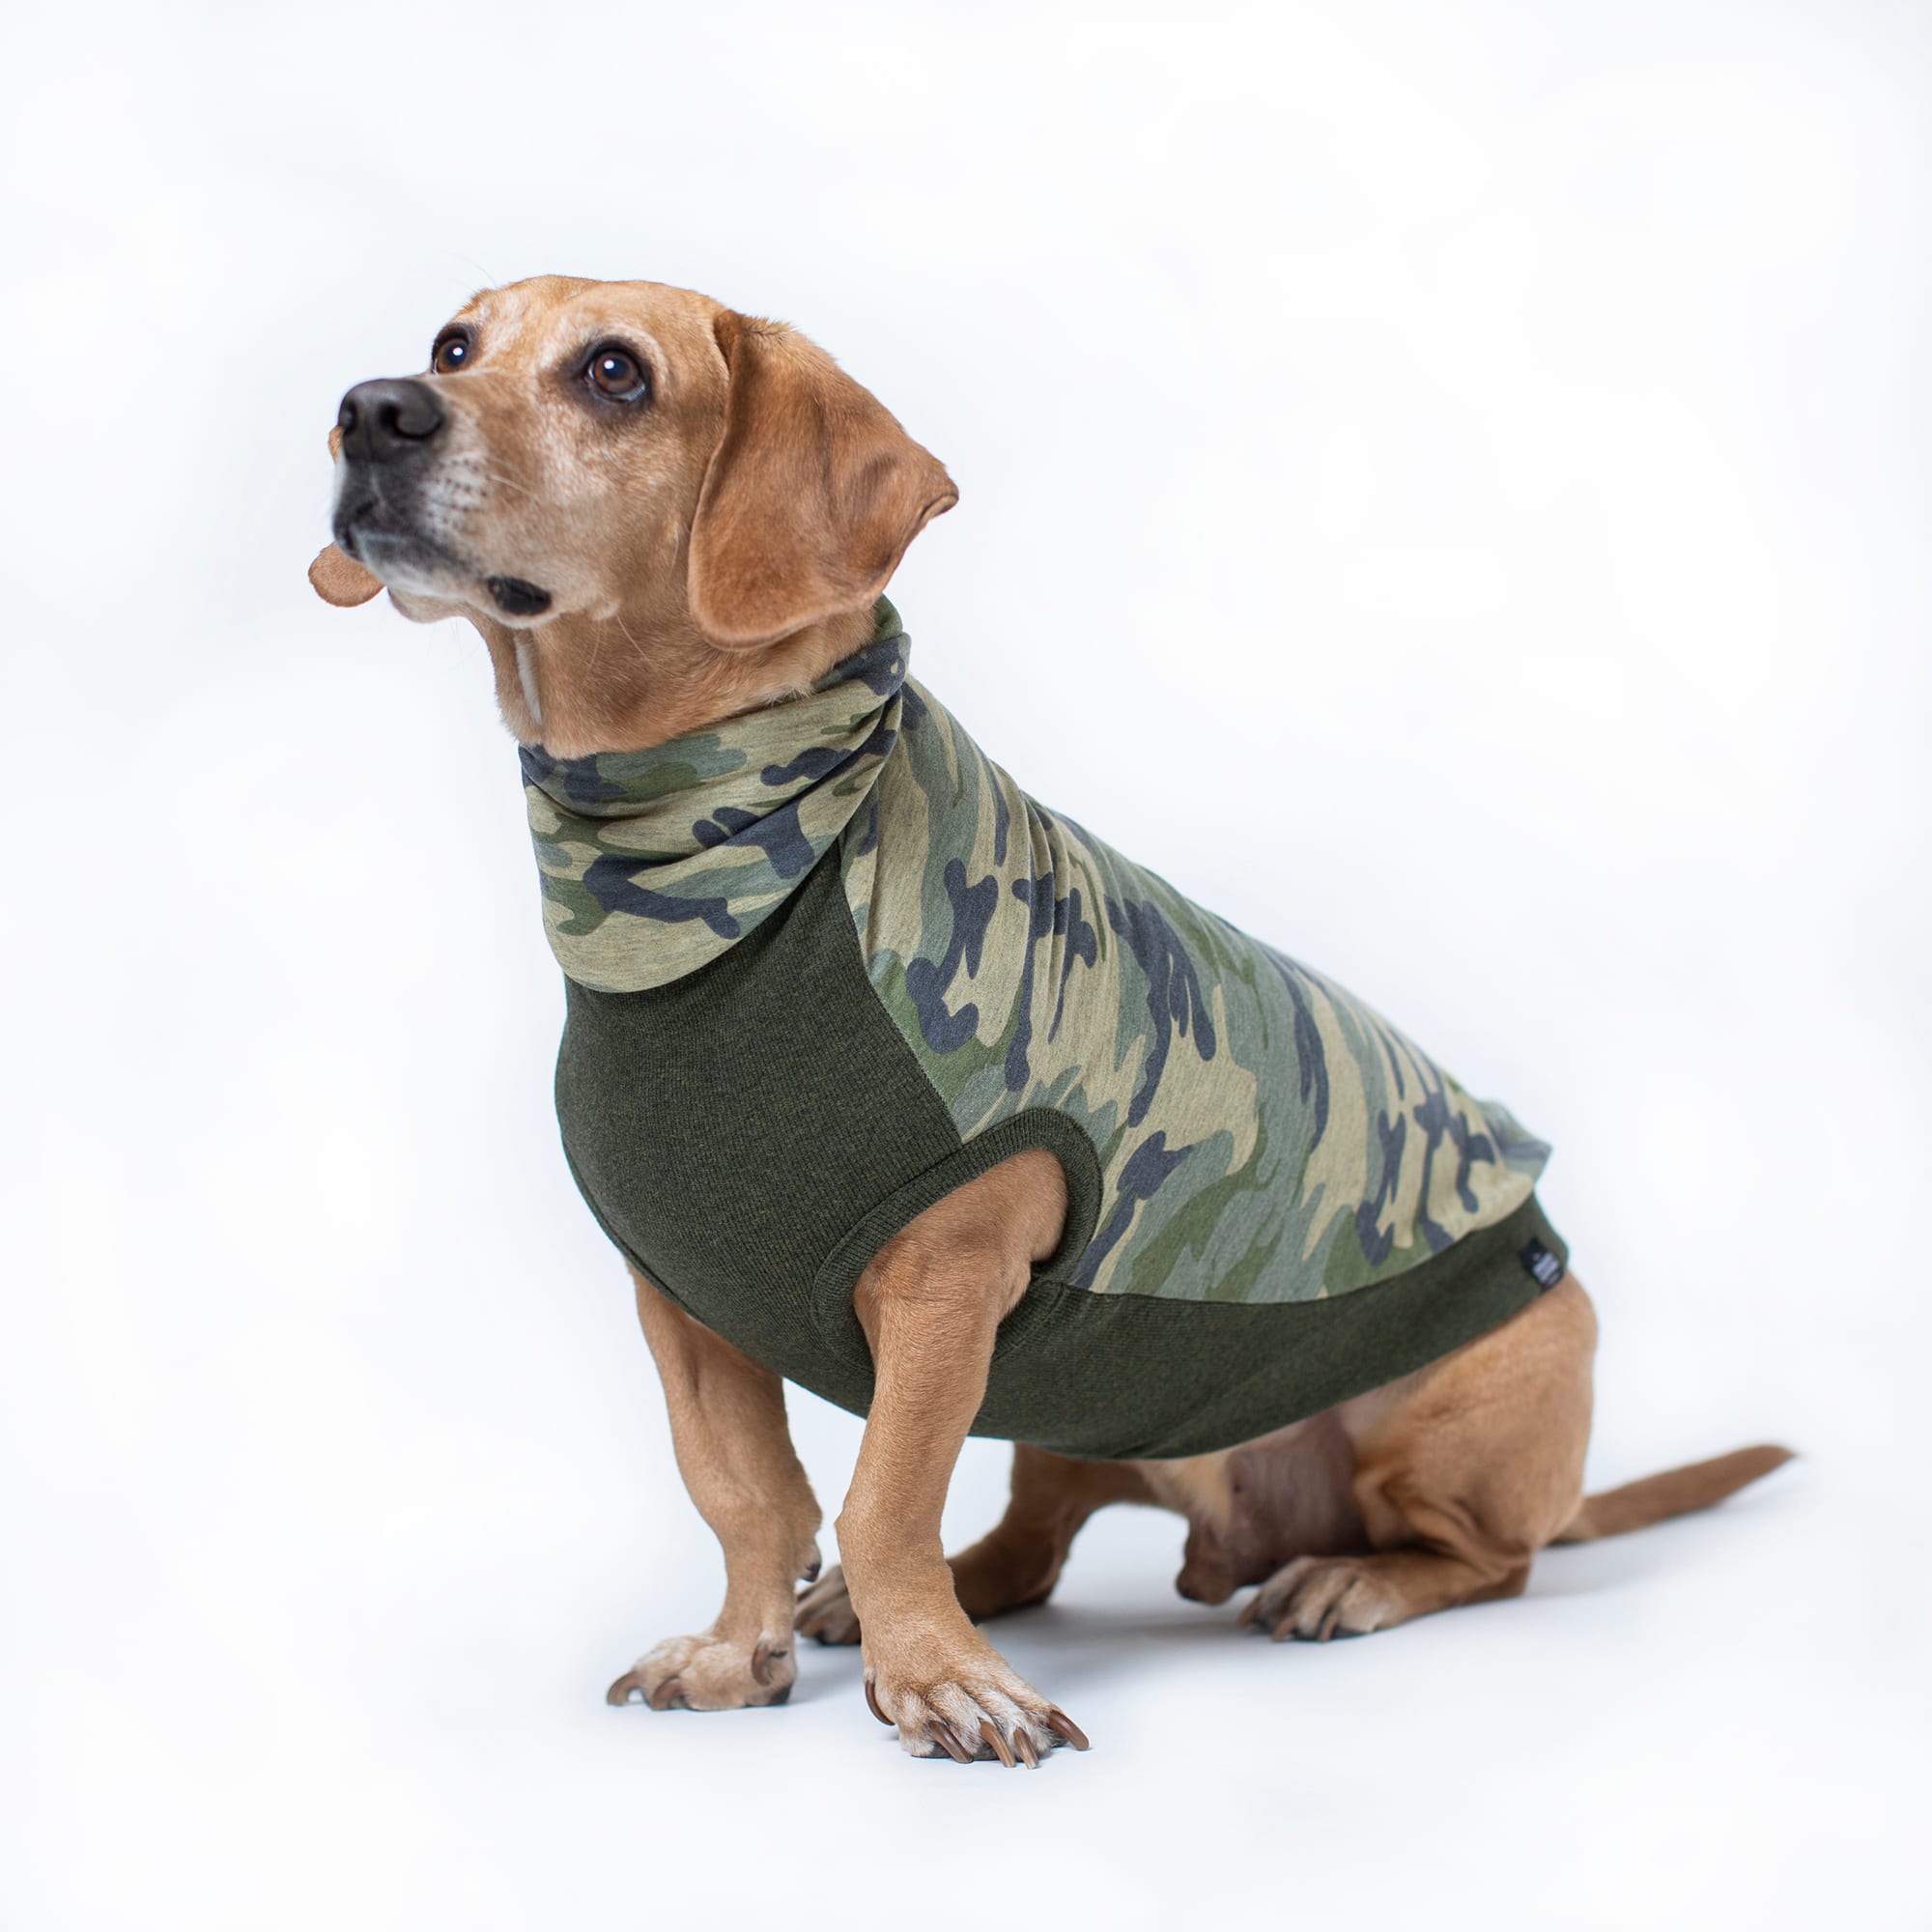 Pet Clothes Dog Shirt Soft Ruffled Color Shirt Turtleneck Outfit for Small,Medium,Slightly Big Dog/Cat